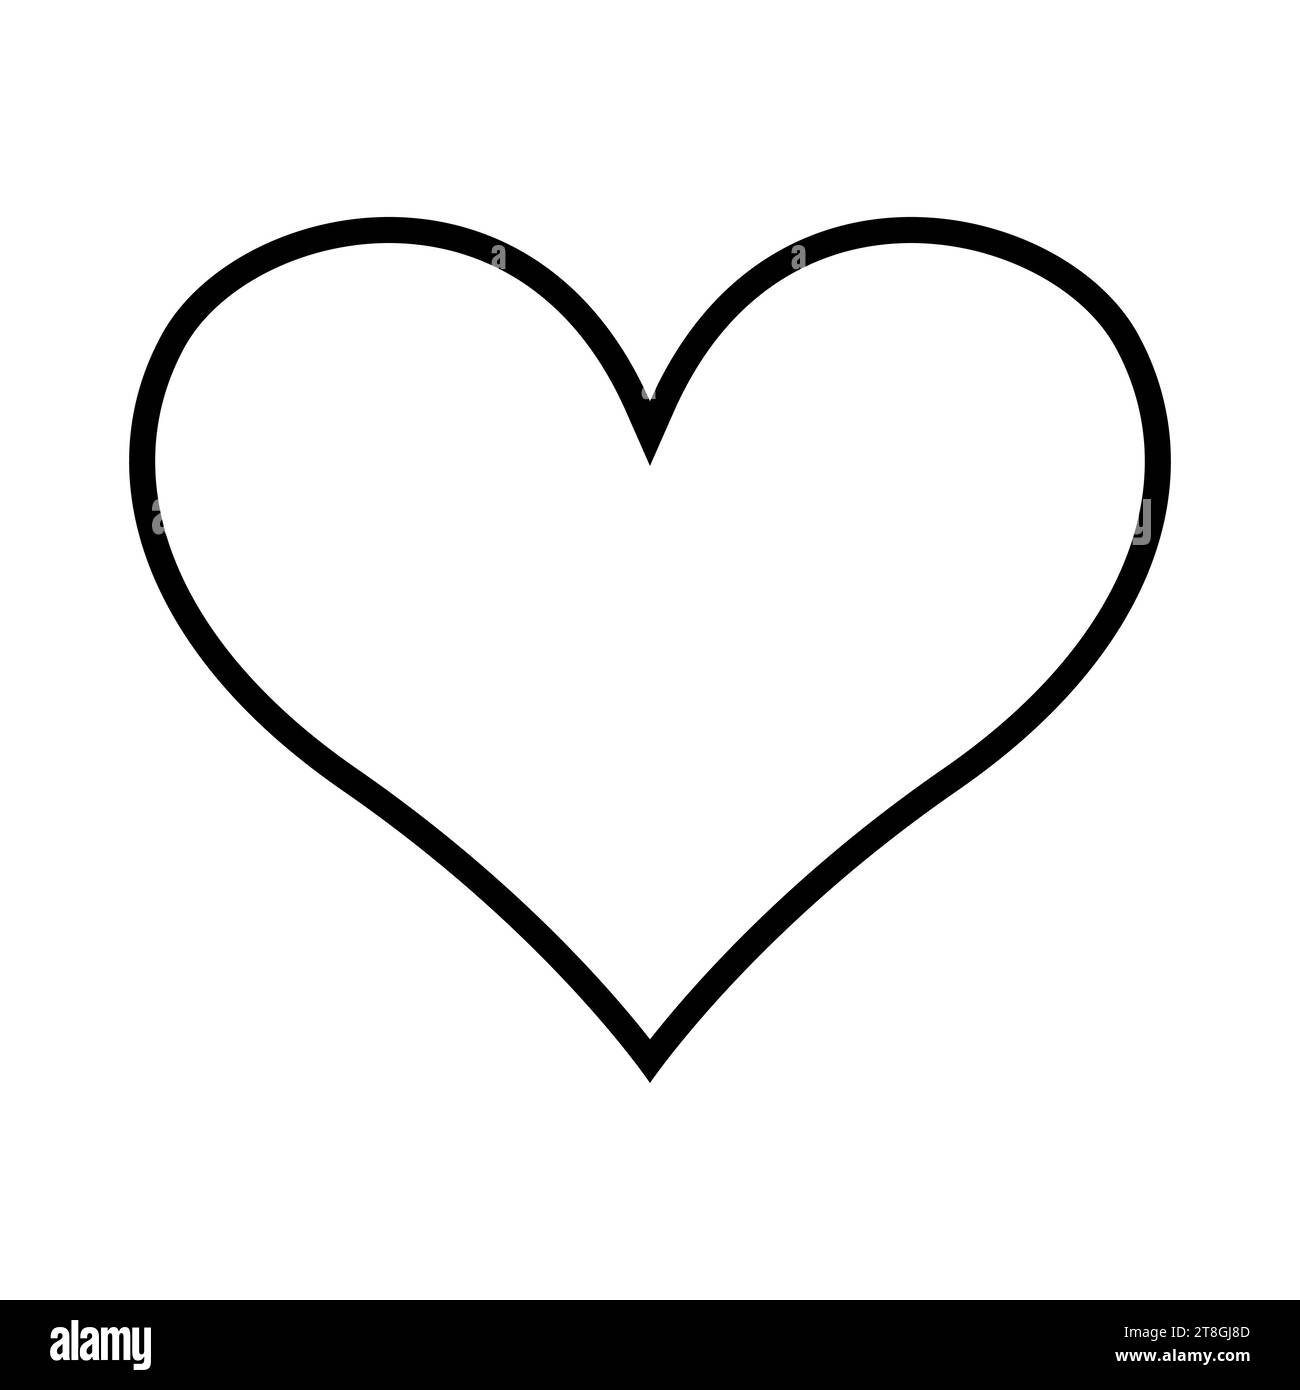 heart shape symbol, black and white vector silhouette illustration Stock Vector